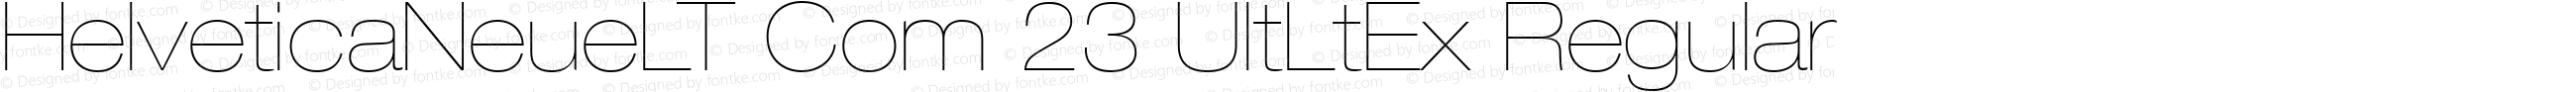 Helvetica Neue LT Com 23 Ultra Light Extended